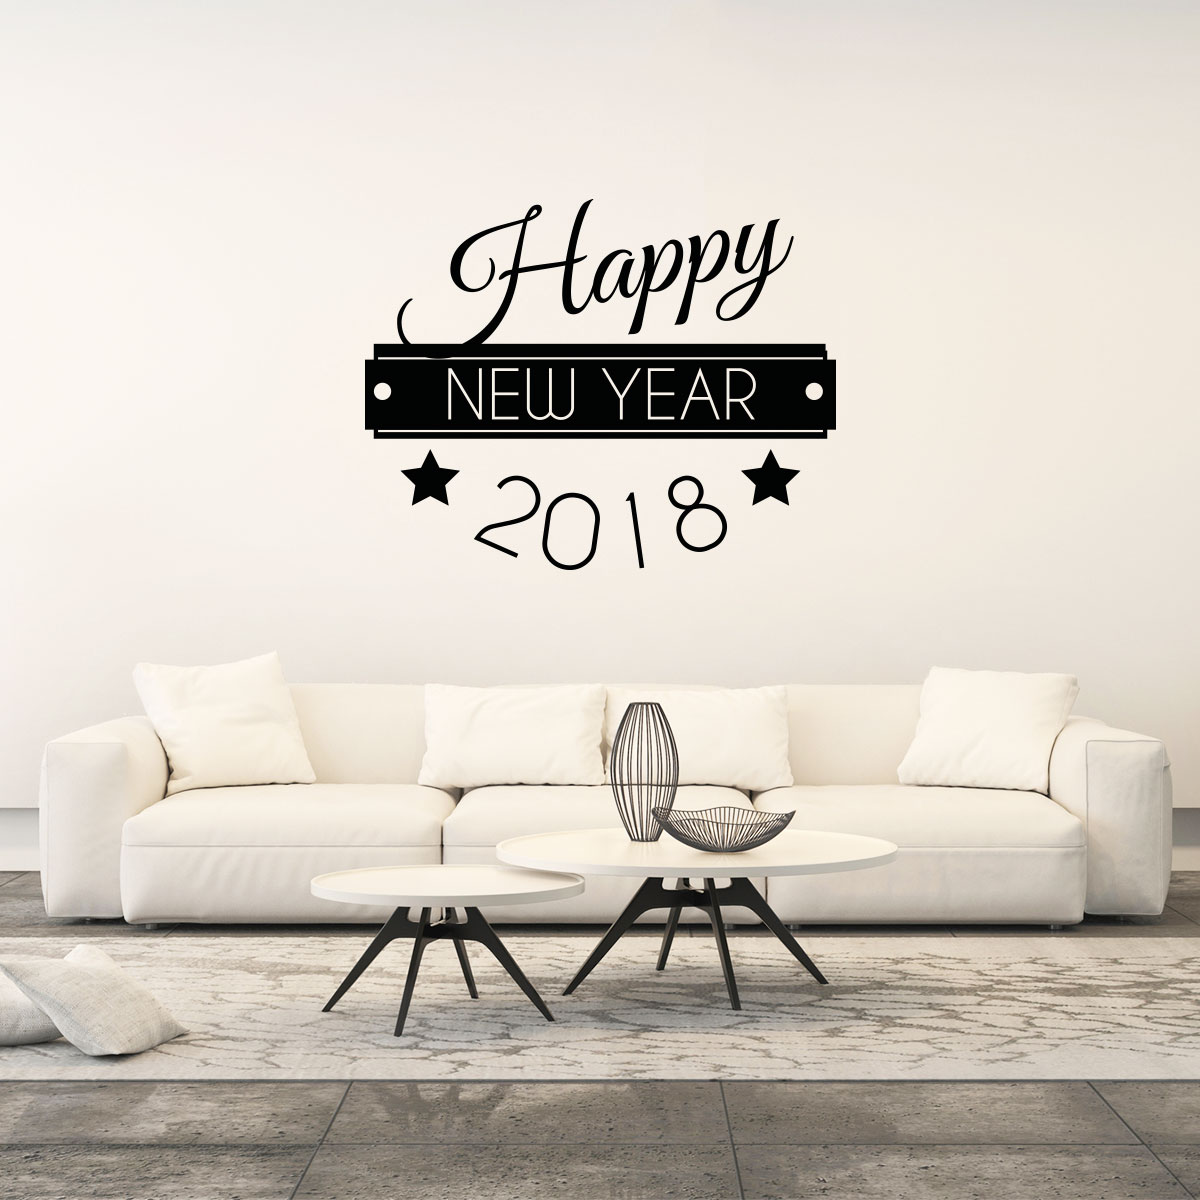 Vinilo happy new year 2018